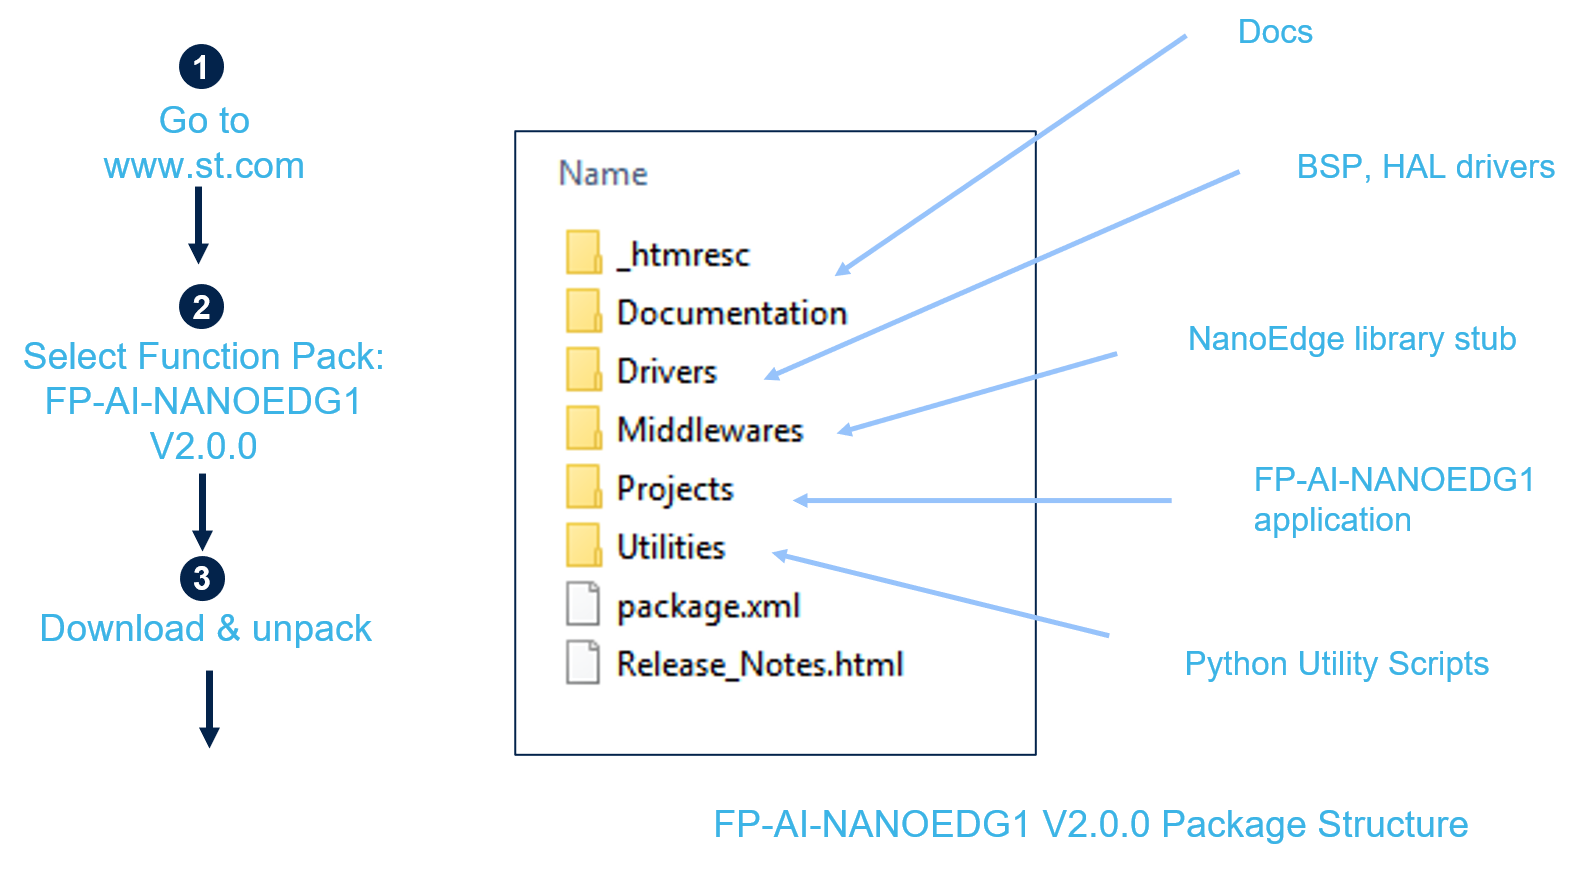 Contents of FP-AI-NANOEDG1 pack